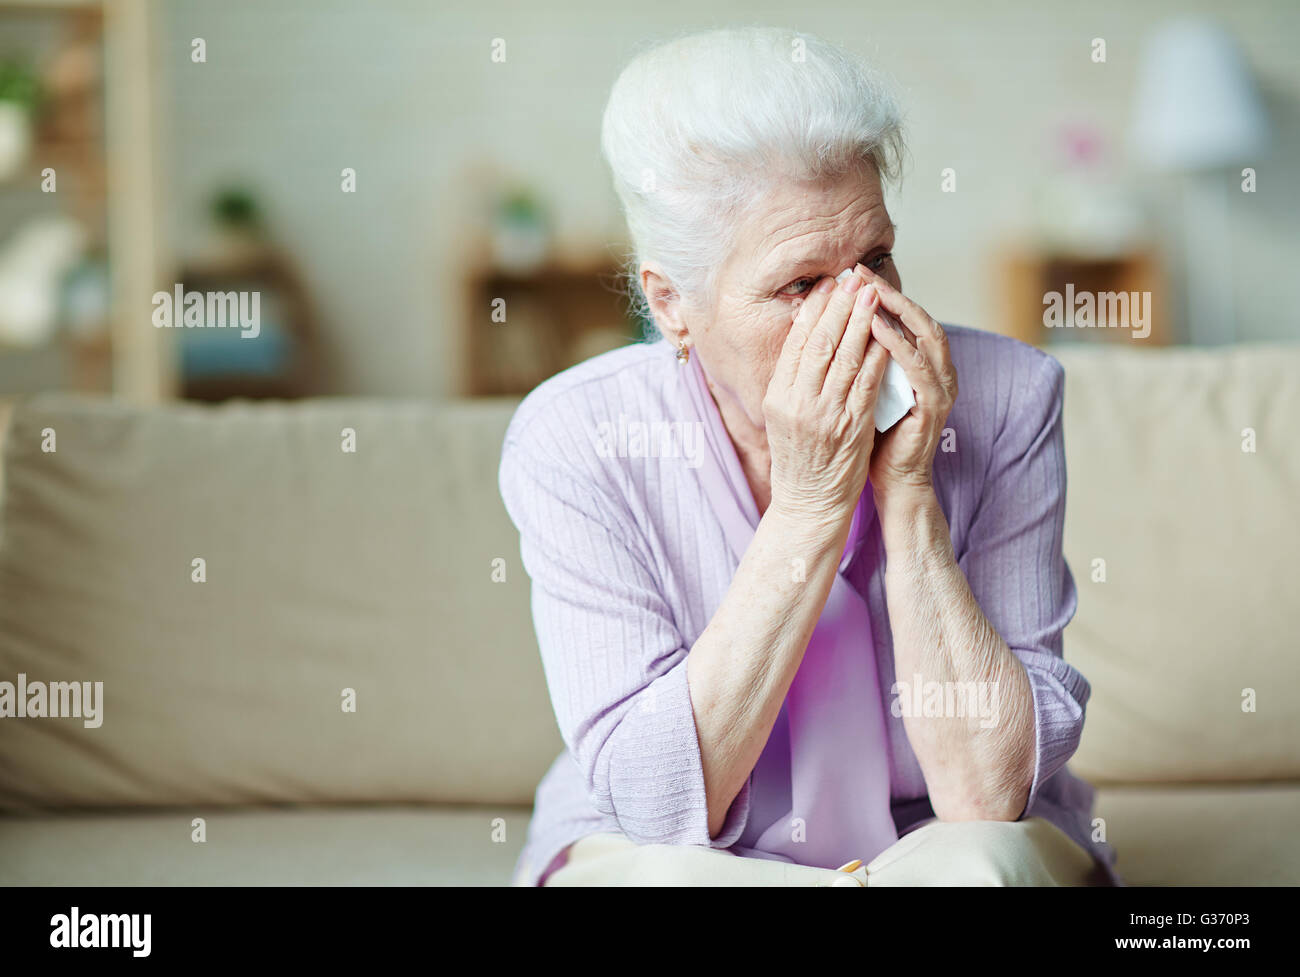 Crying elderly woman Stock Photo